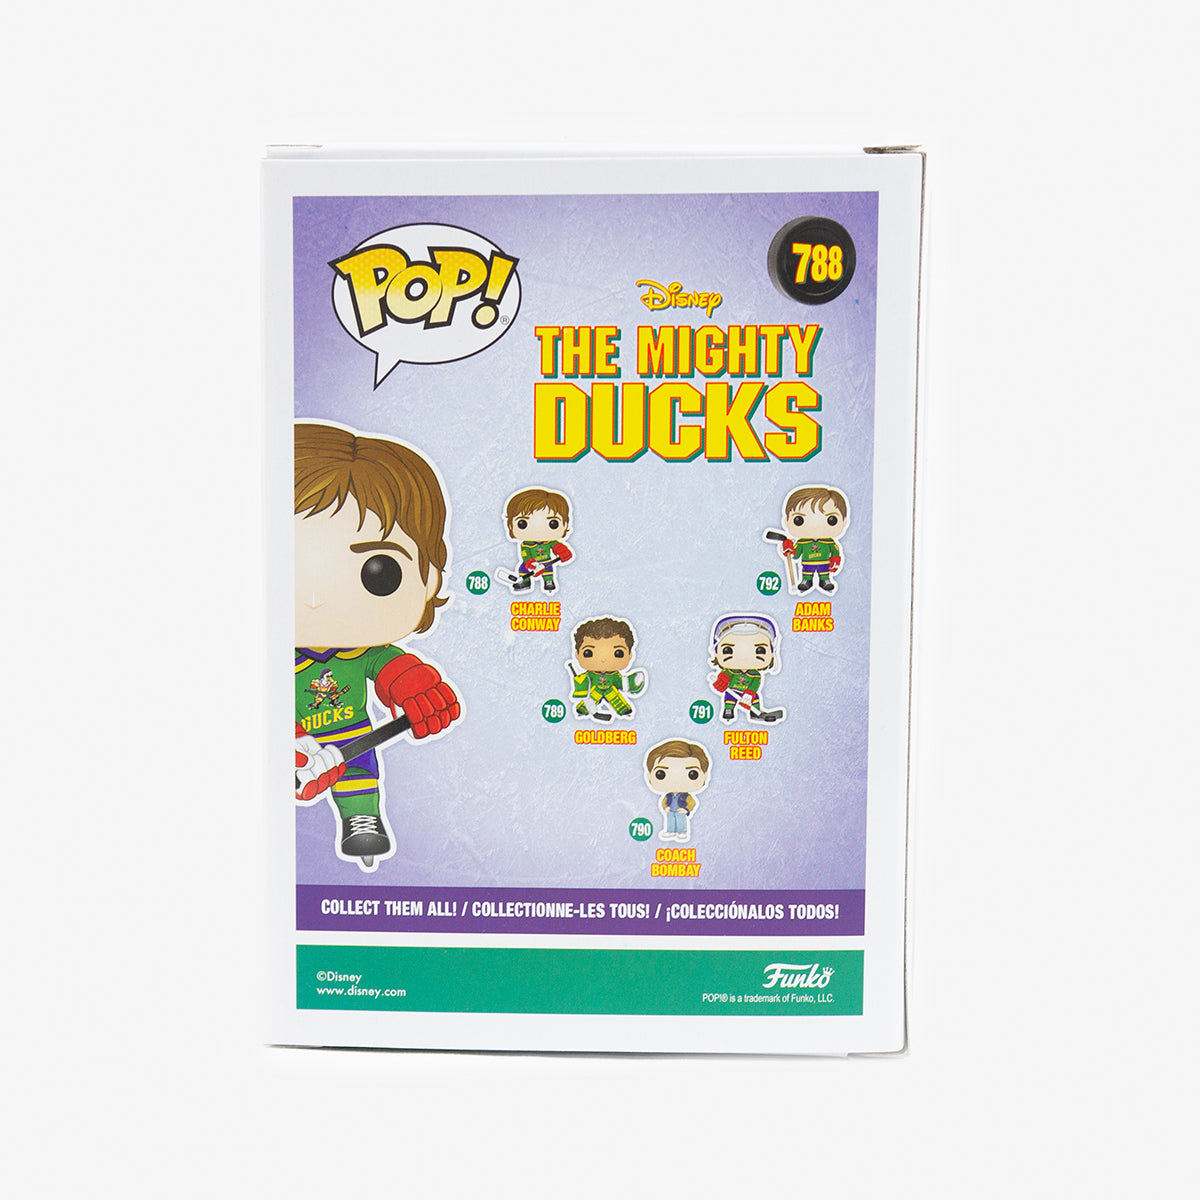 Mighty Ducks Charlie Conway Funko Pop! Vinyl Figure Disney